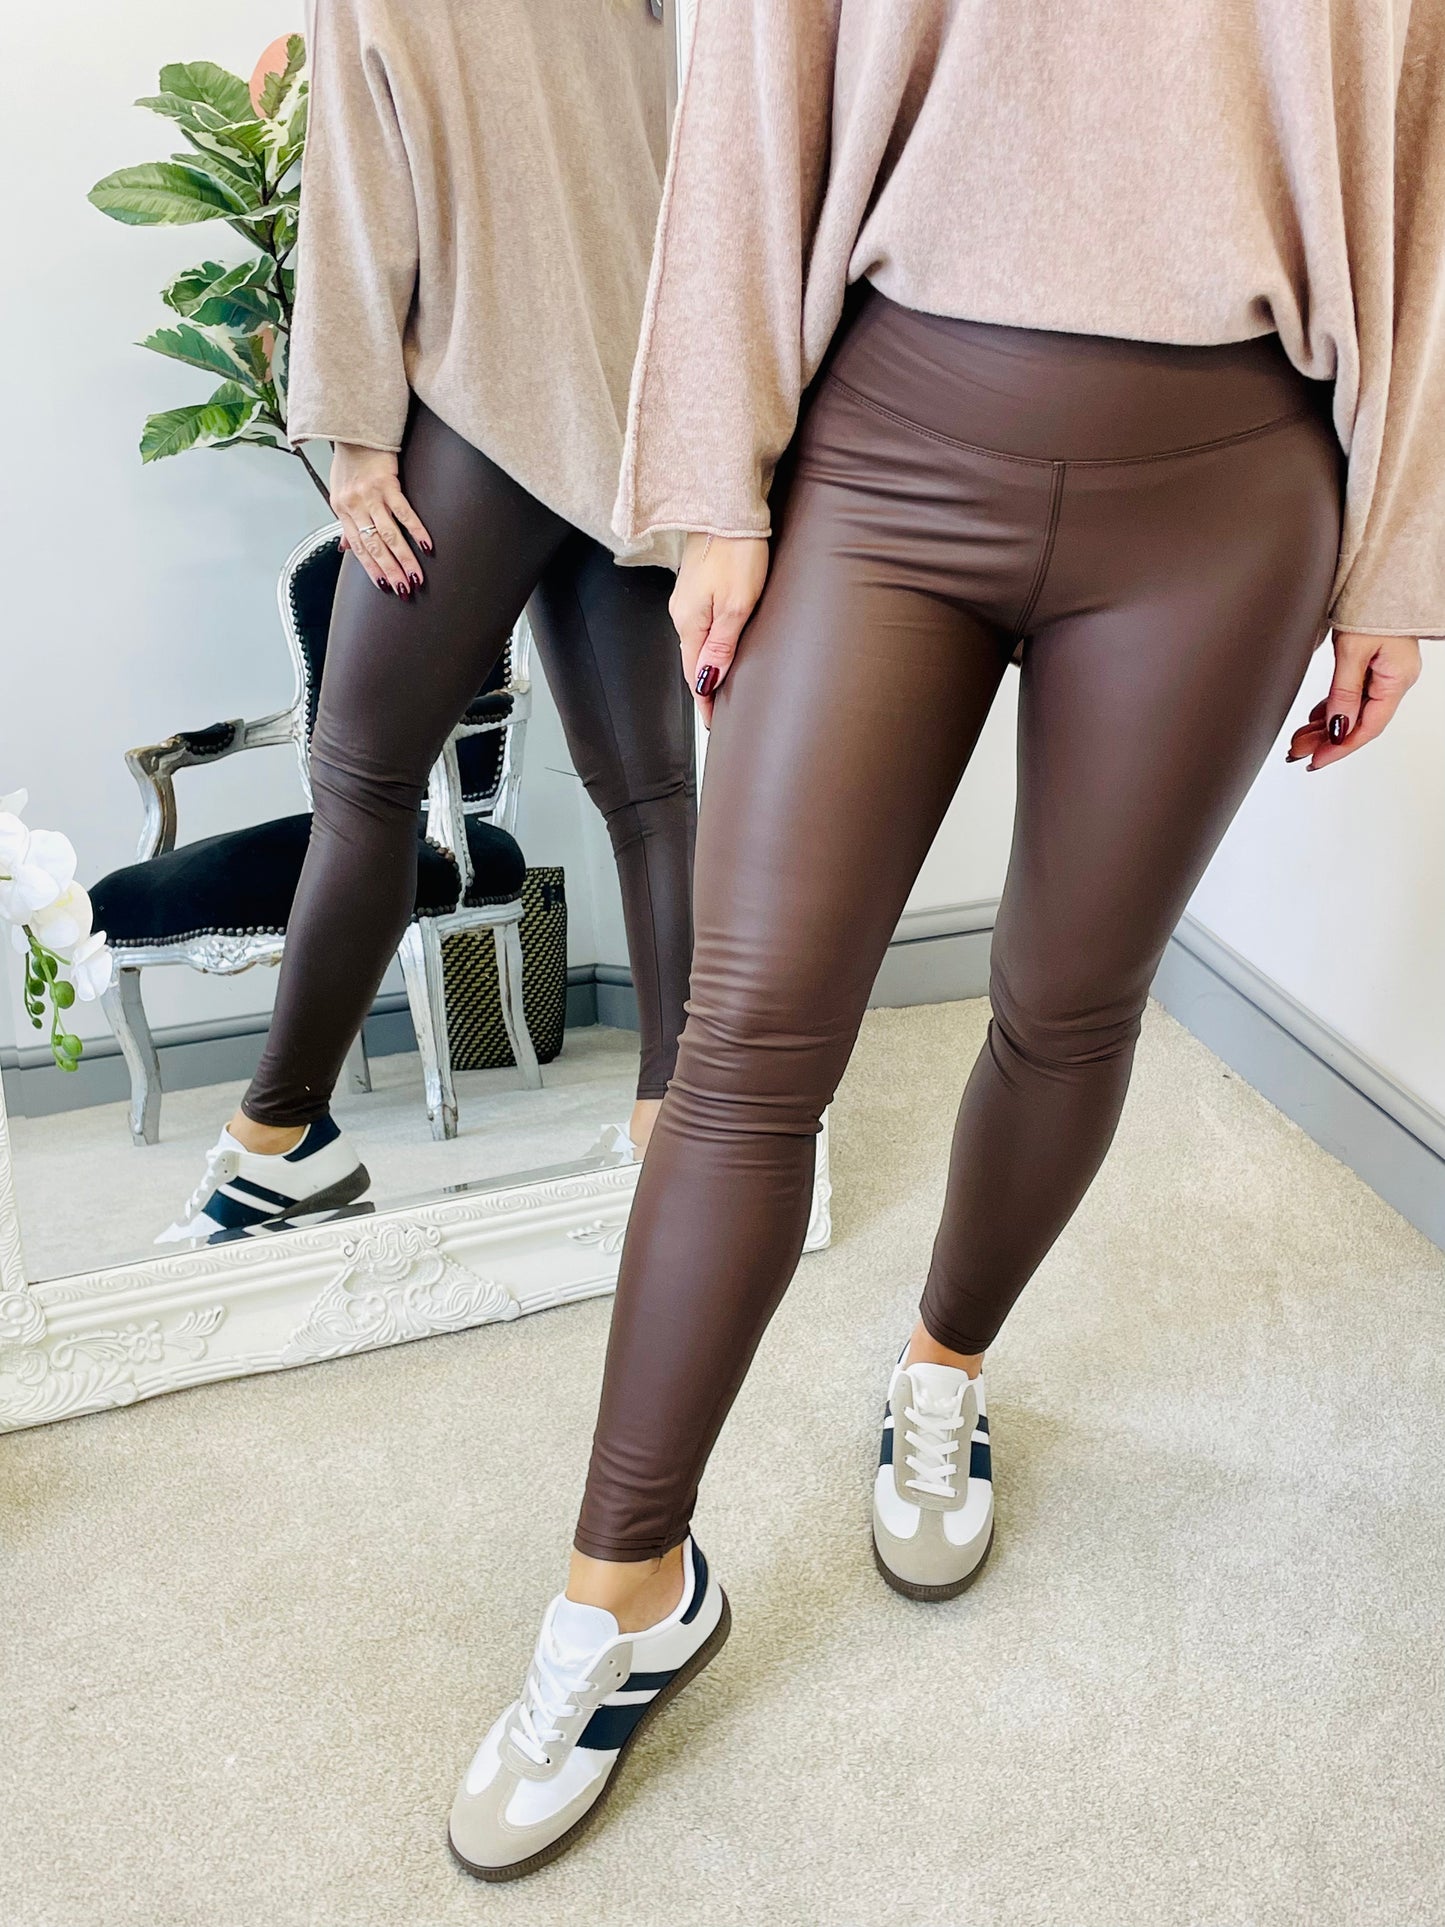 The DISCO chocolate brown pu leggings